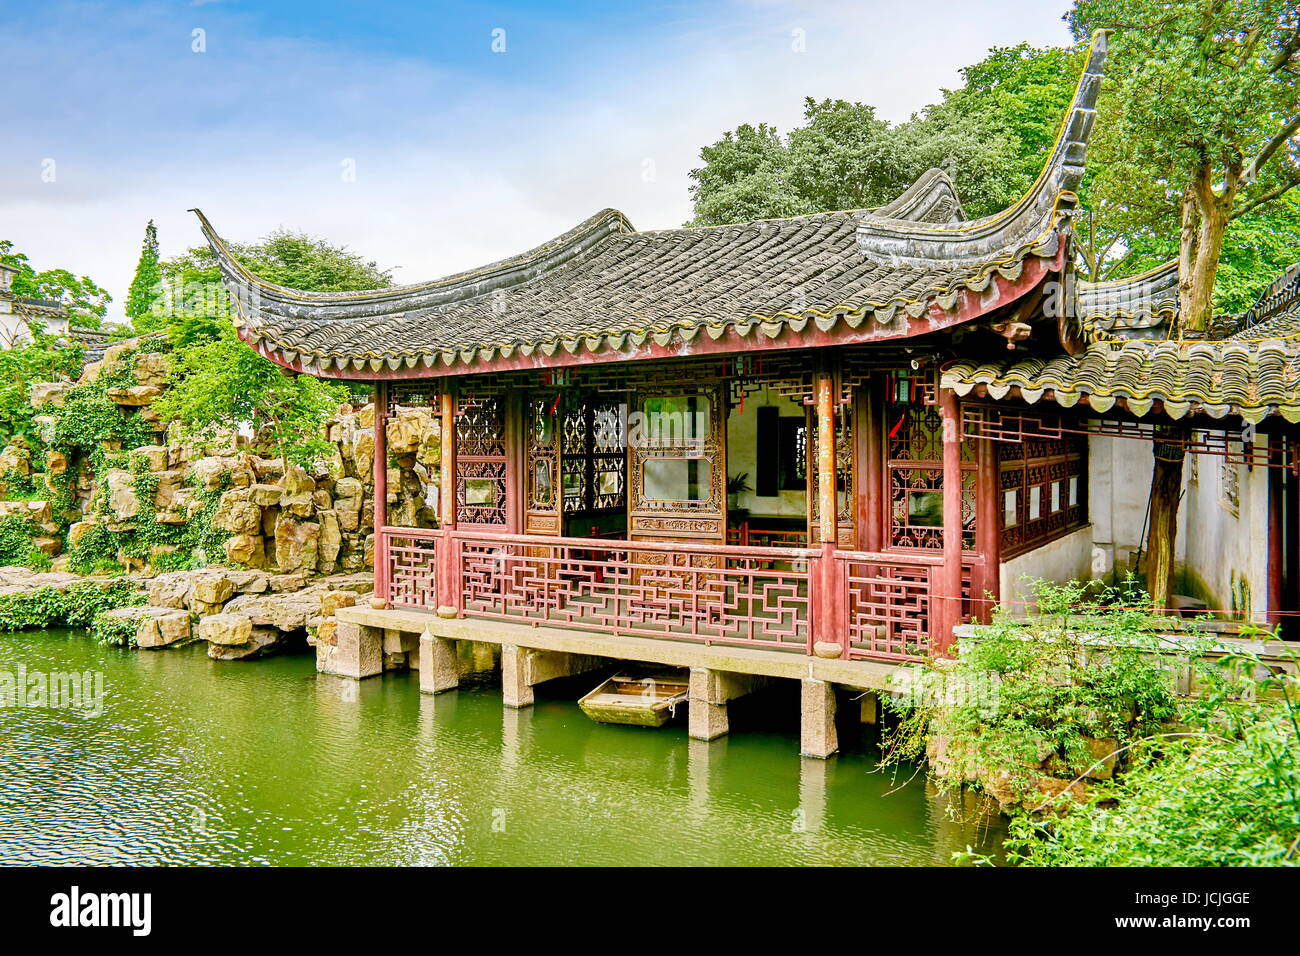 Master of the Nets Garden, Suzhou, China Stock Photo